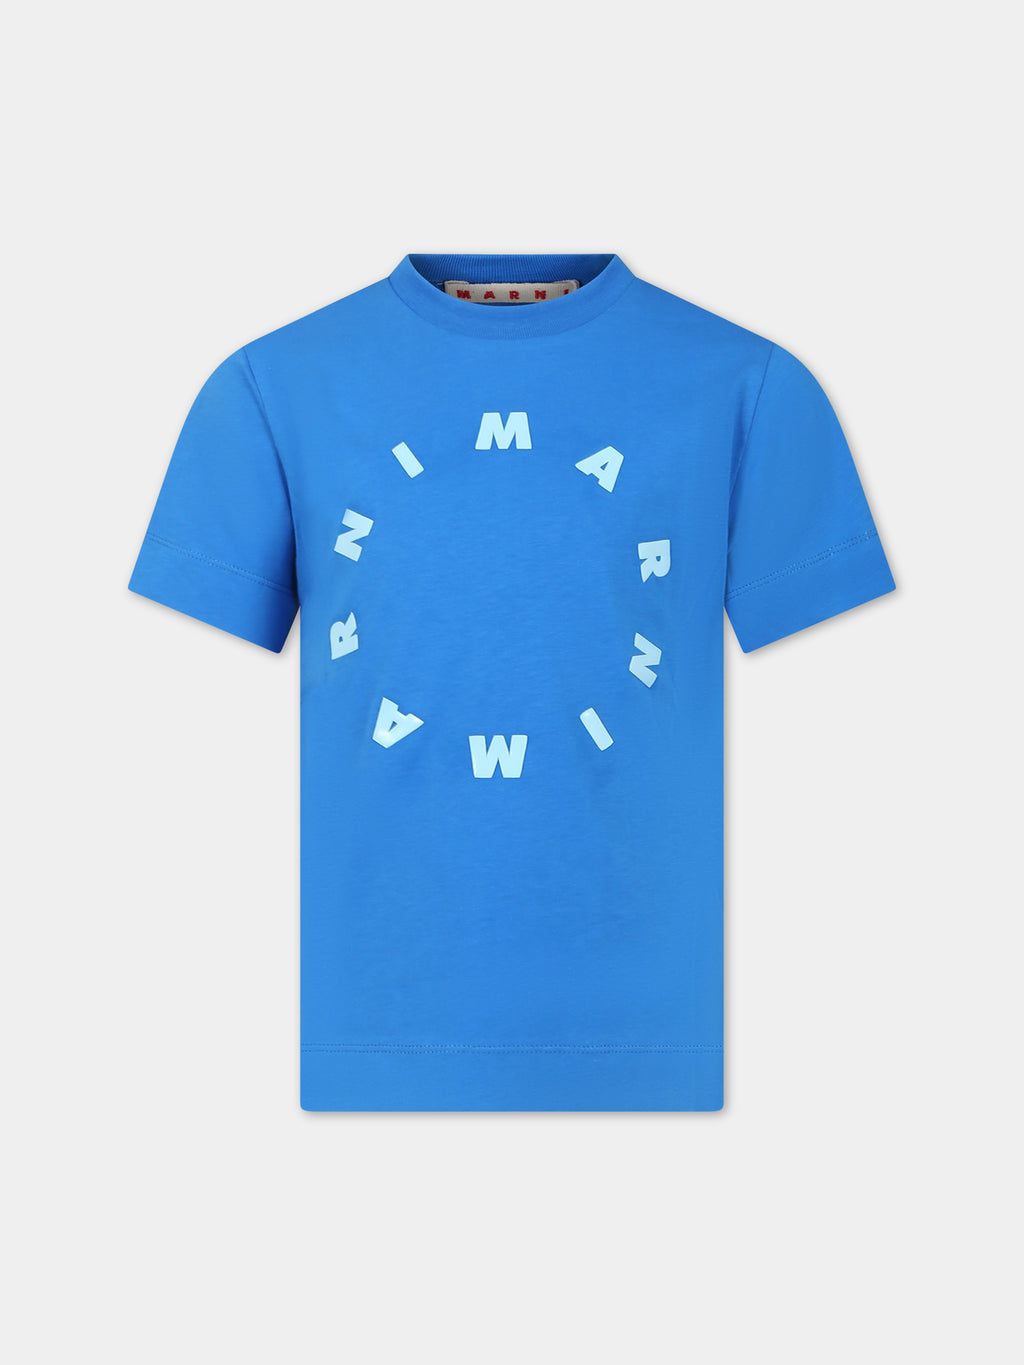 Light blue t-shirt for kids with logo